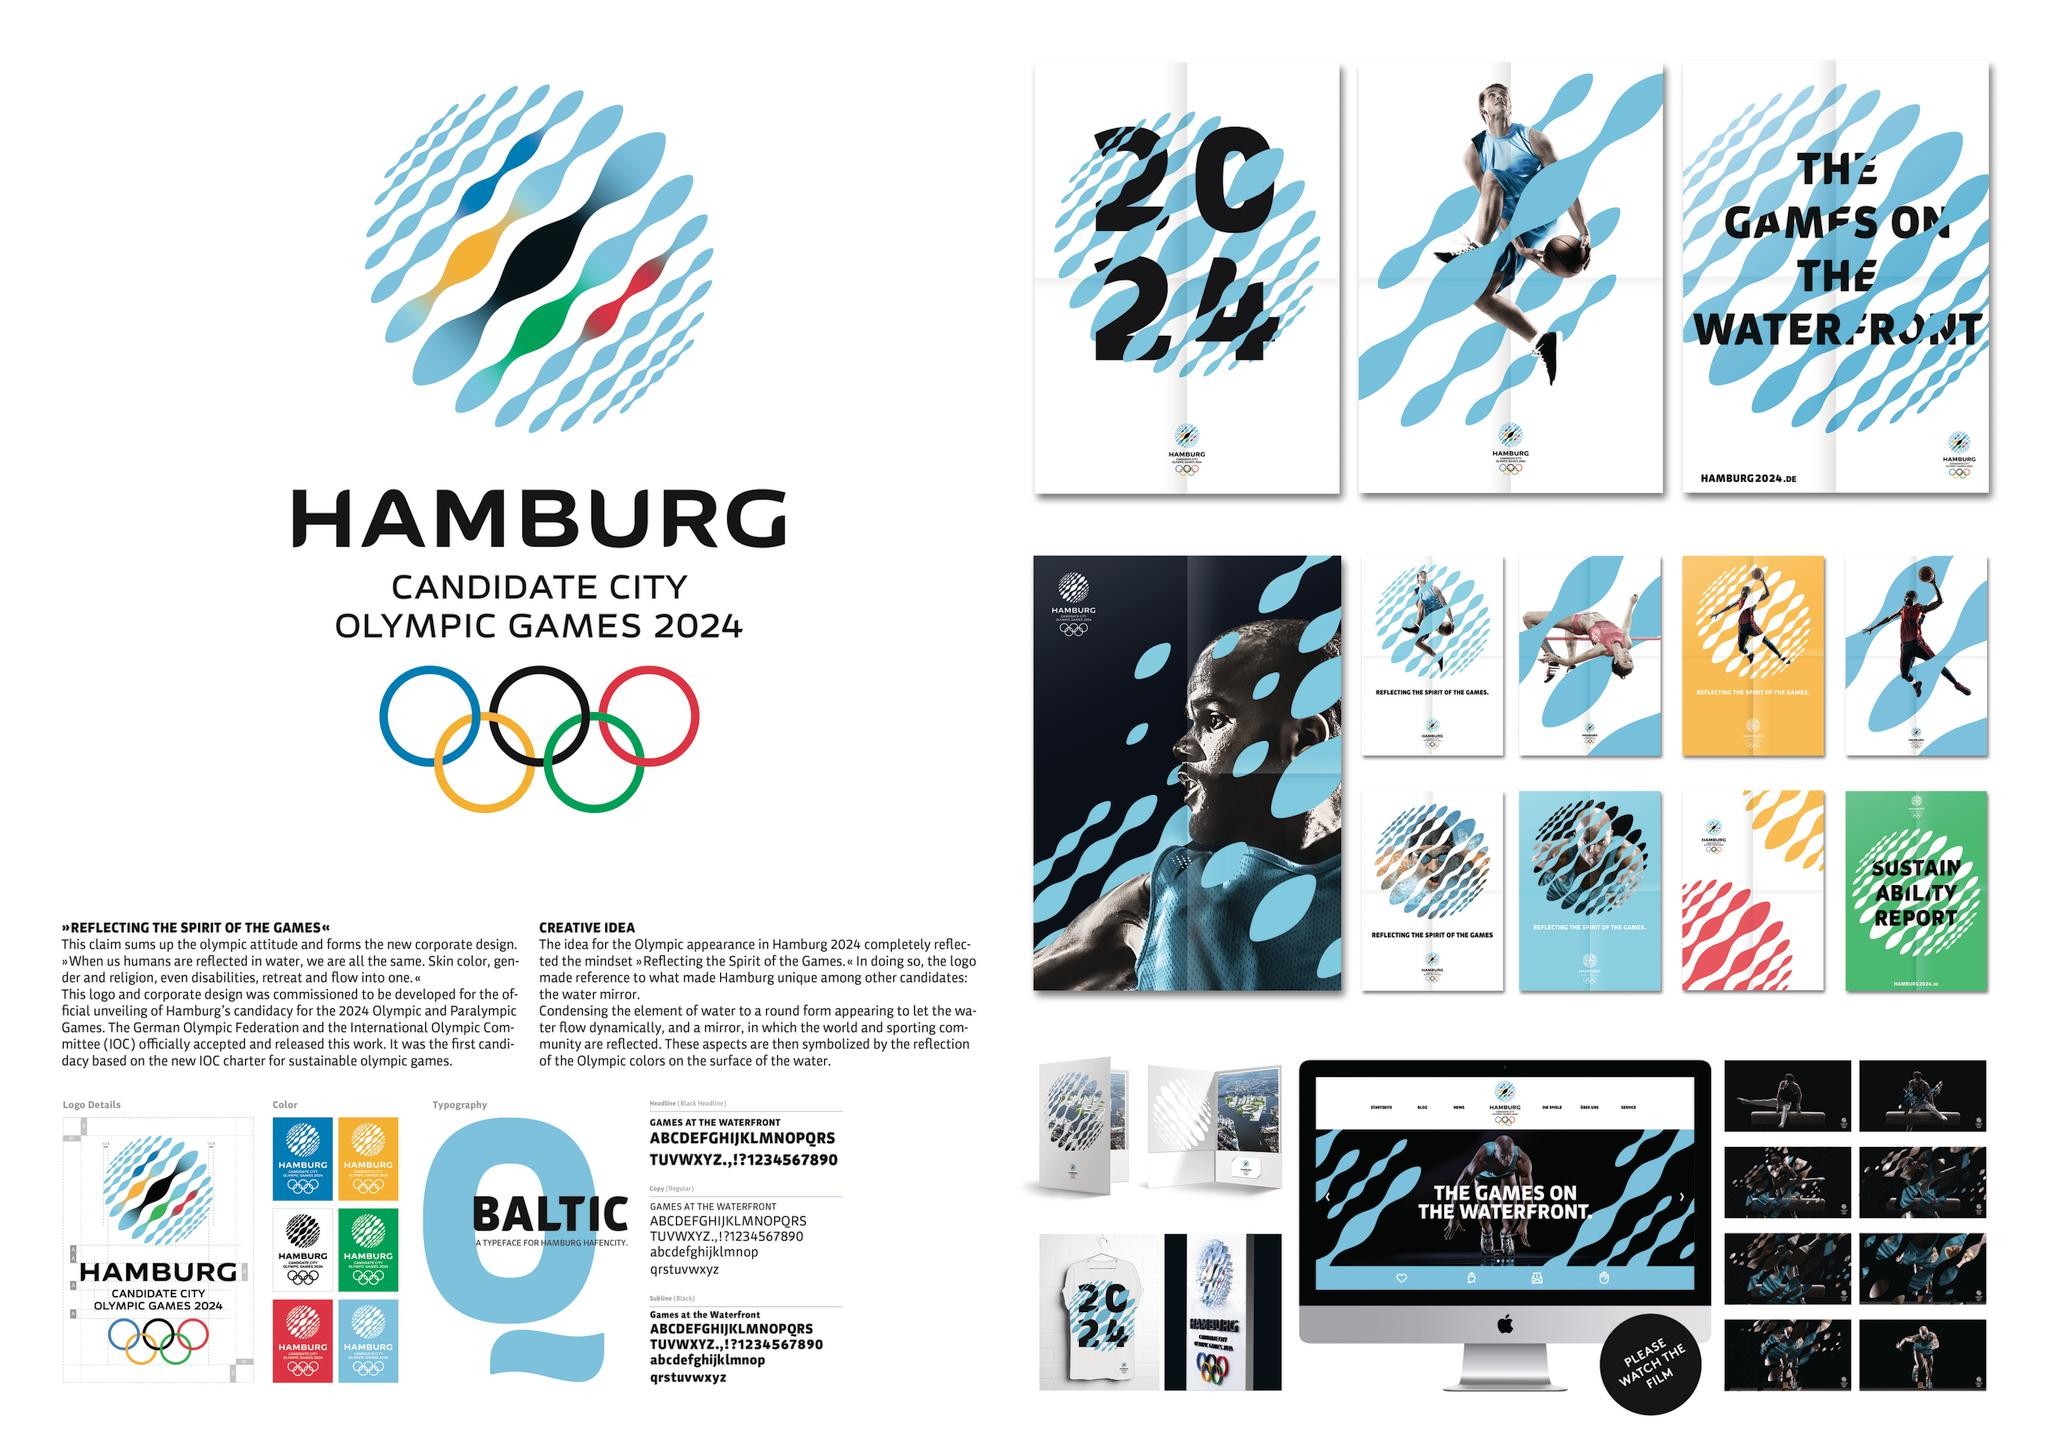 HAMBURG 2024 – “REFLECTING THE SPIRIT OF THE GAMES”